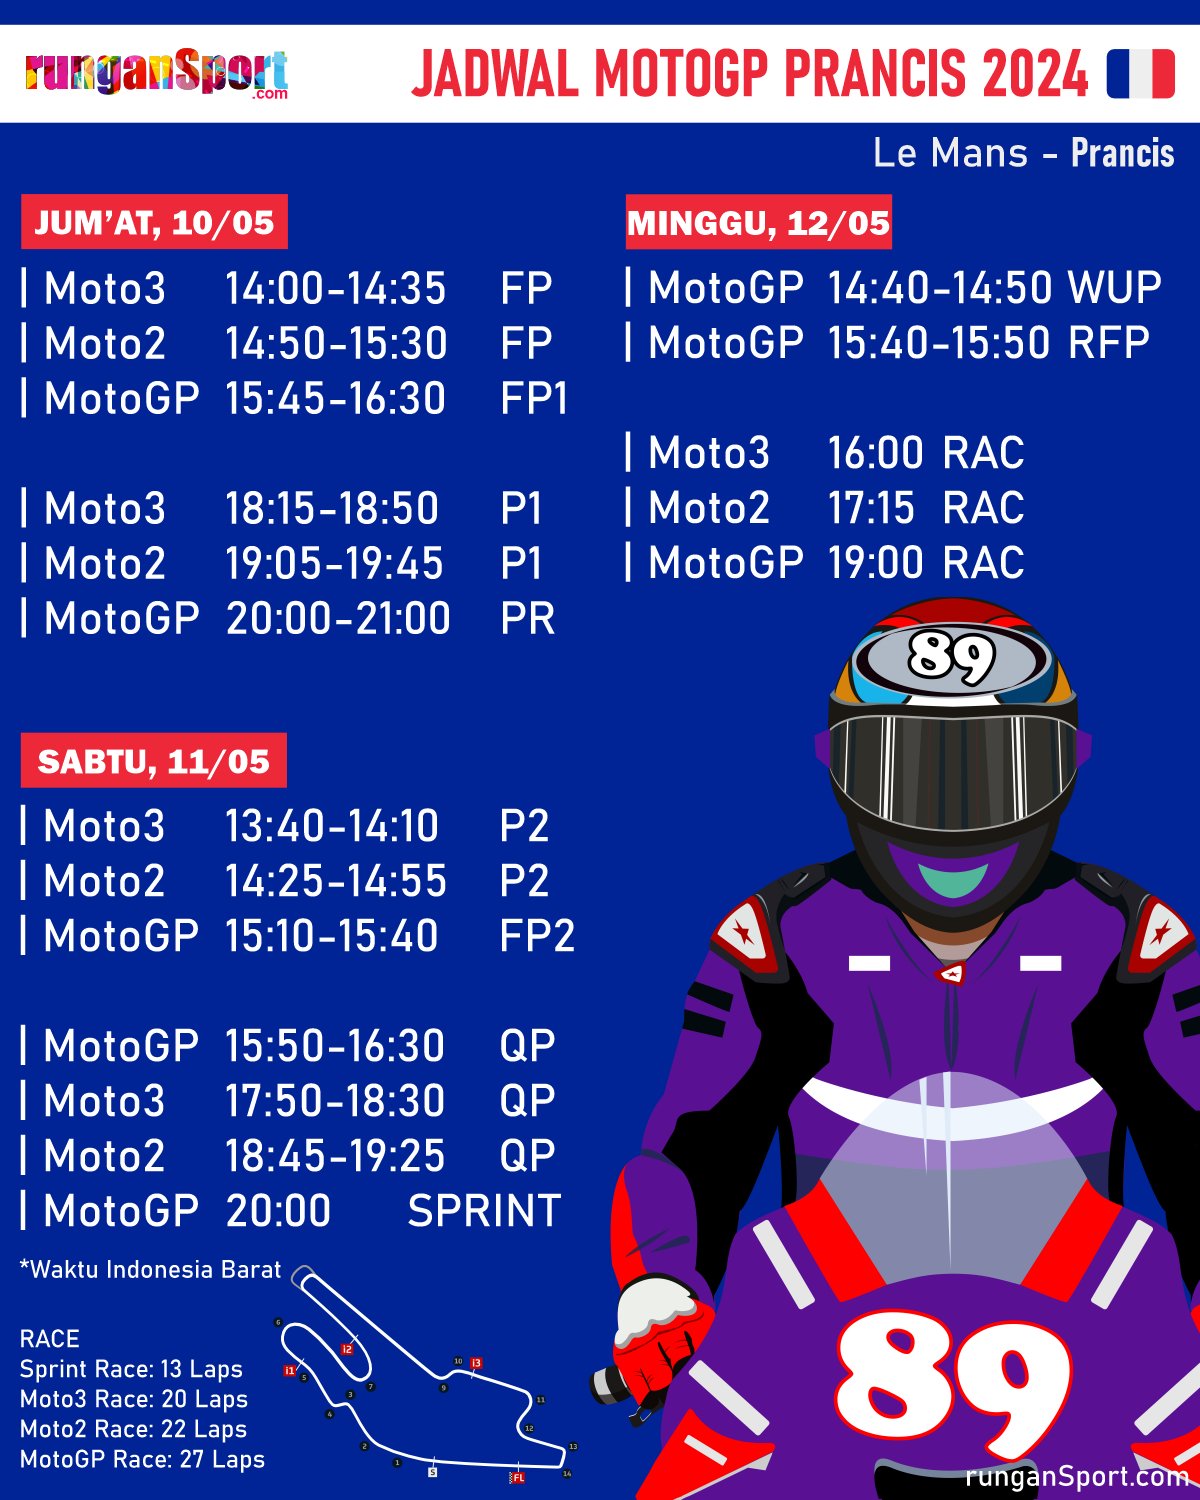 Jadwal Race MotoGP Prancis 2024